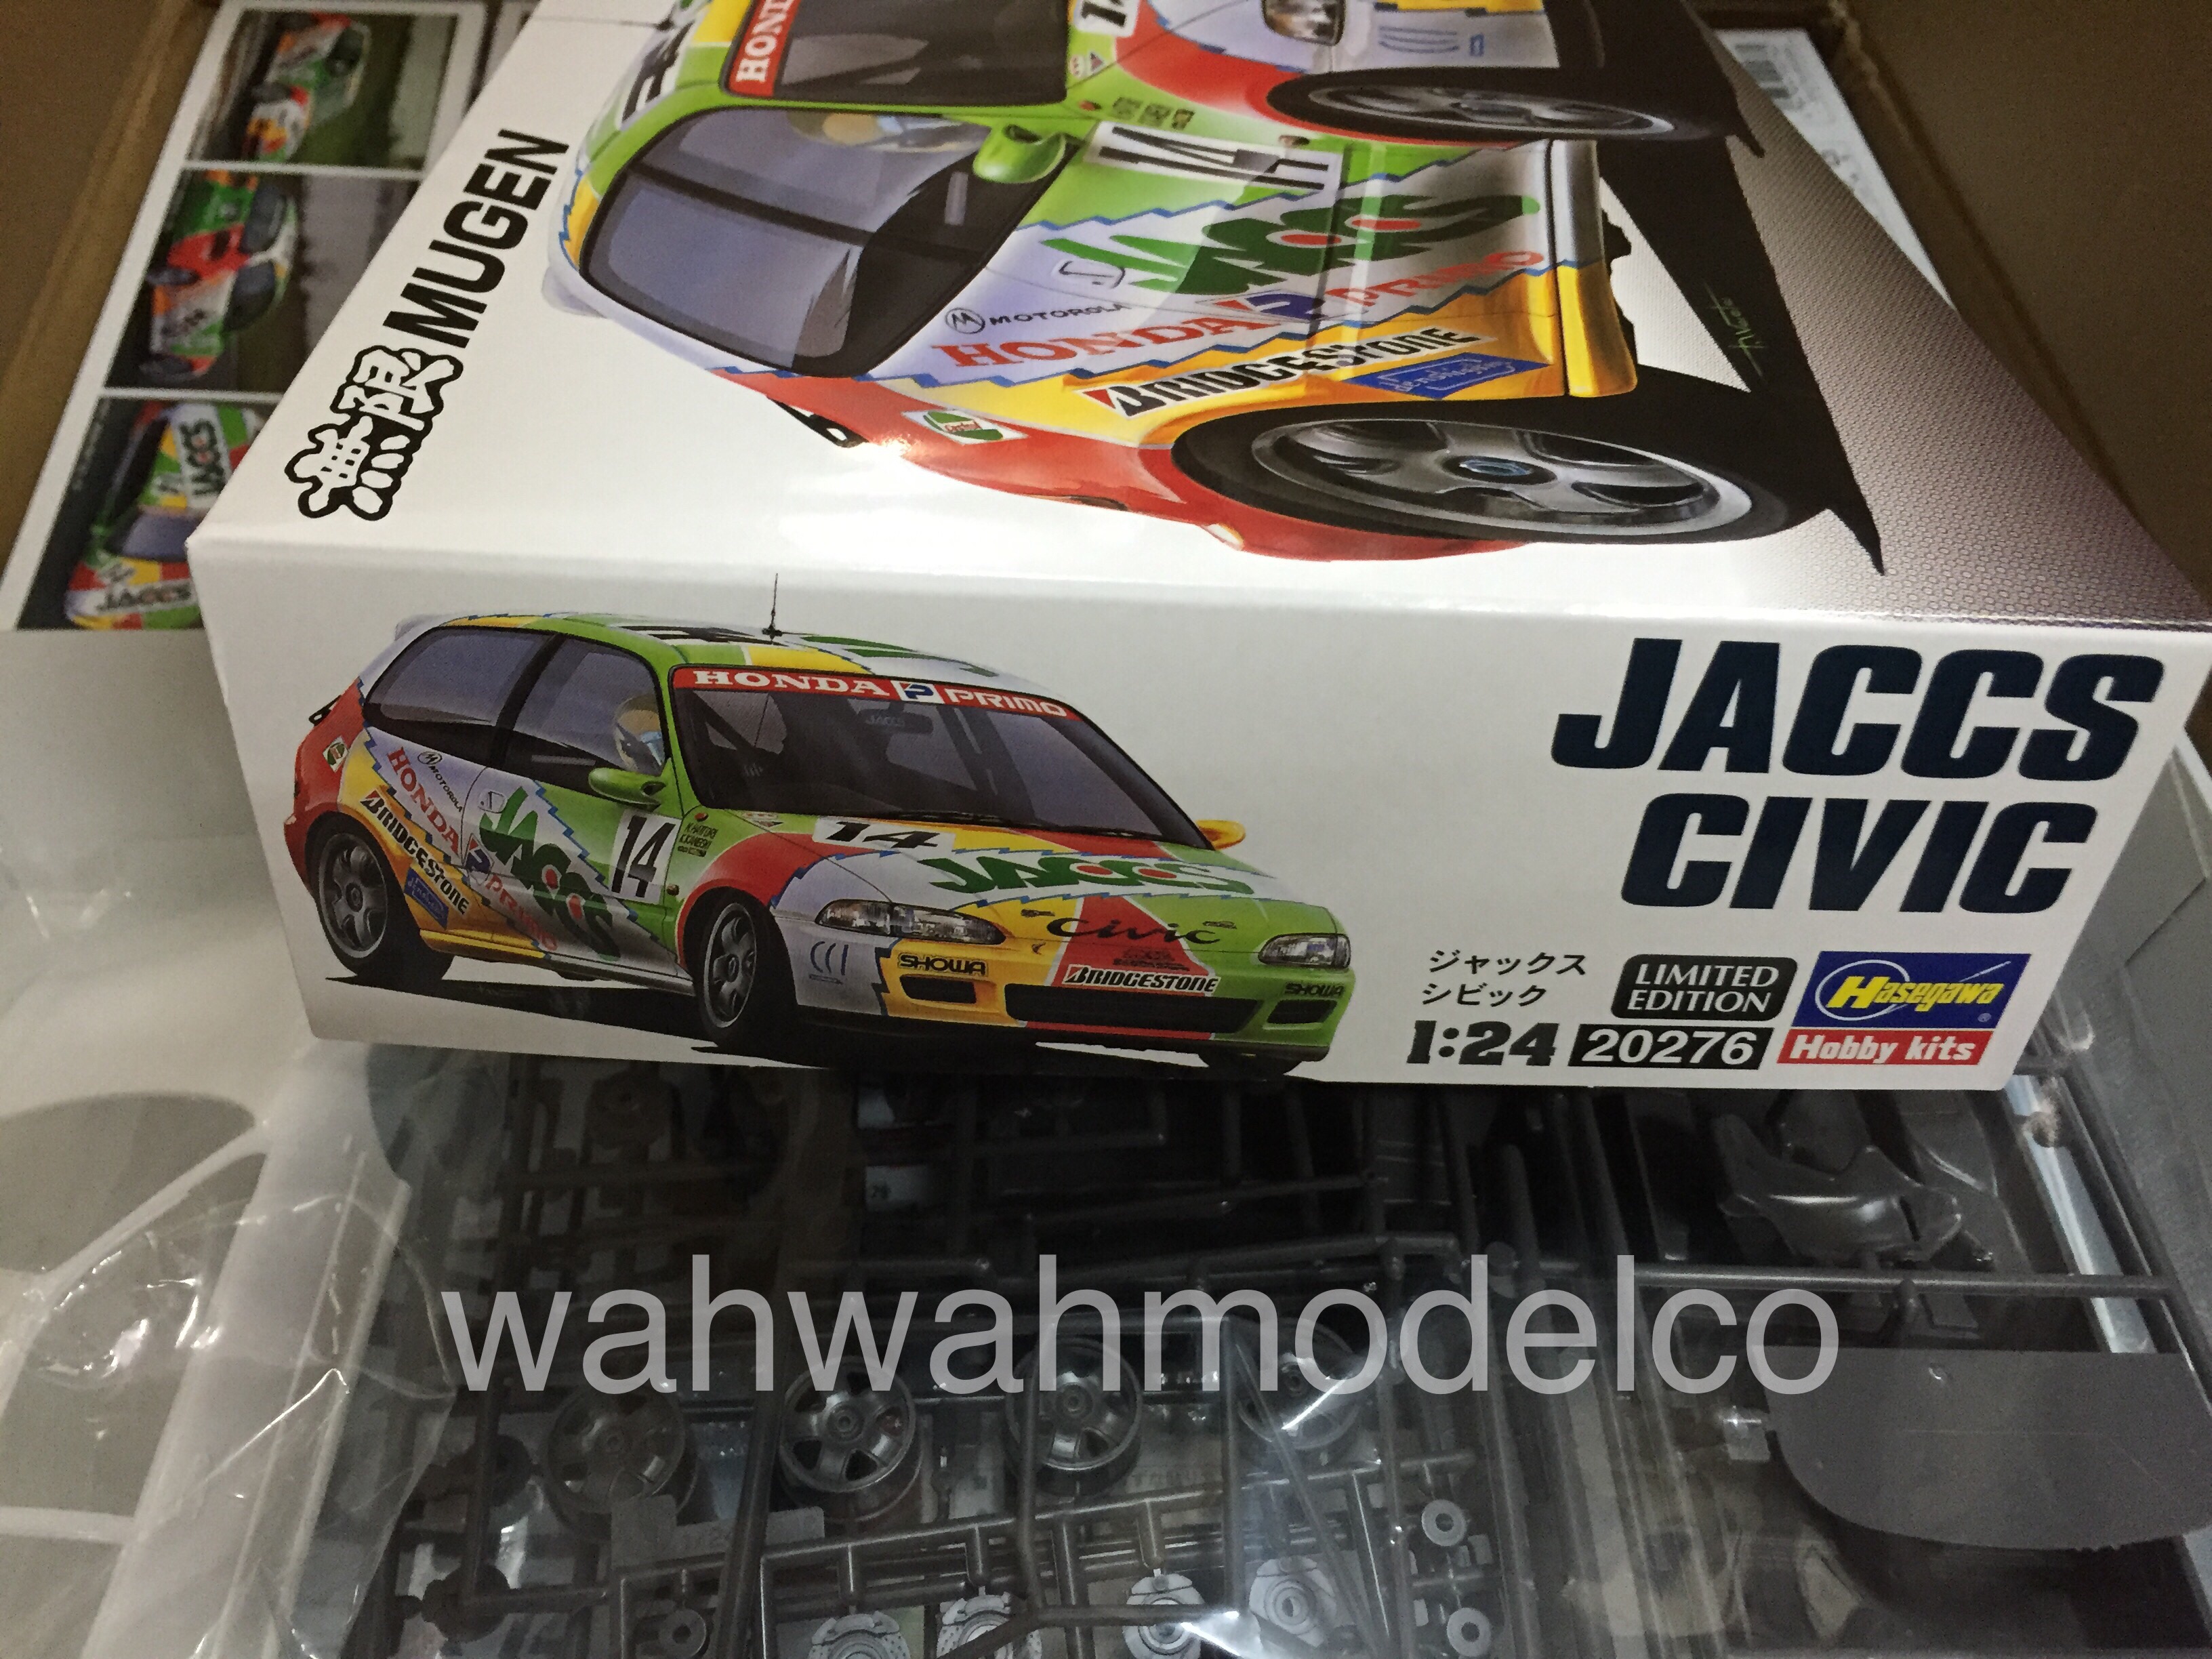 Hasegawa 20276 Mugen Jaccs Civic 1/24 scale kit